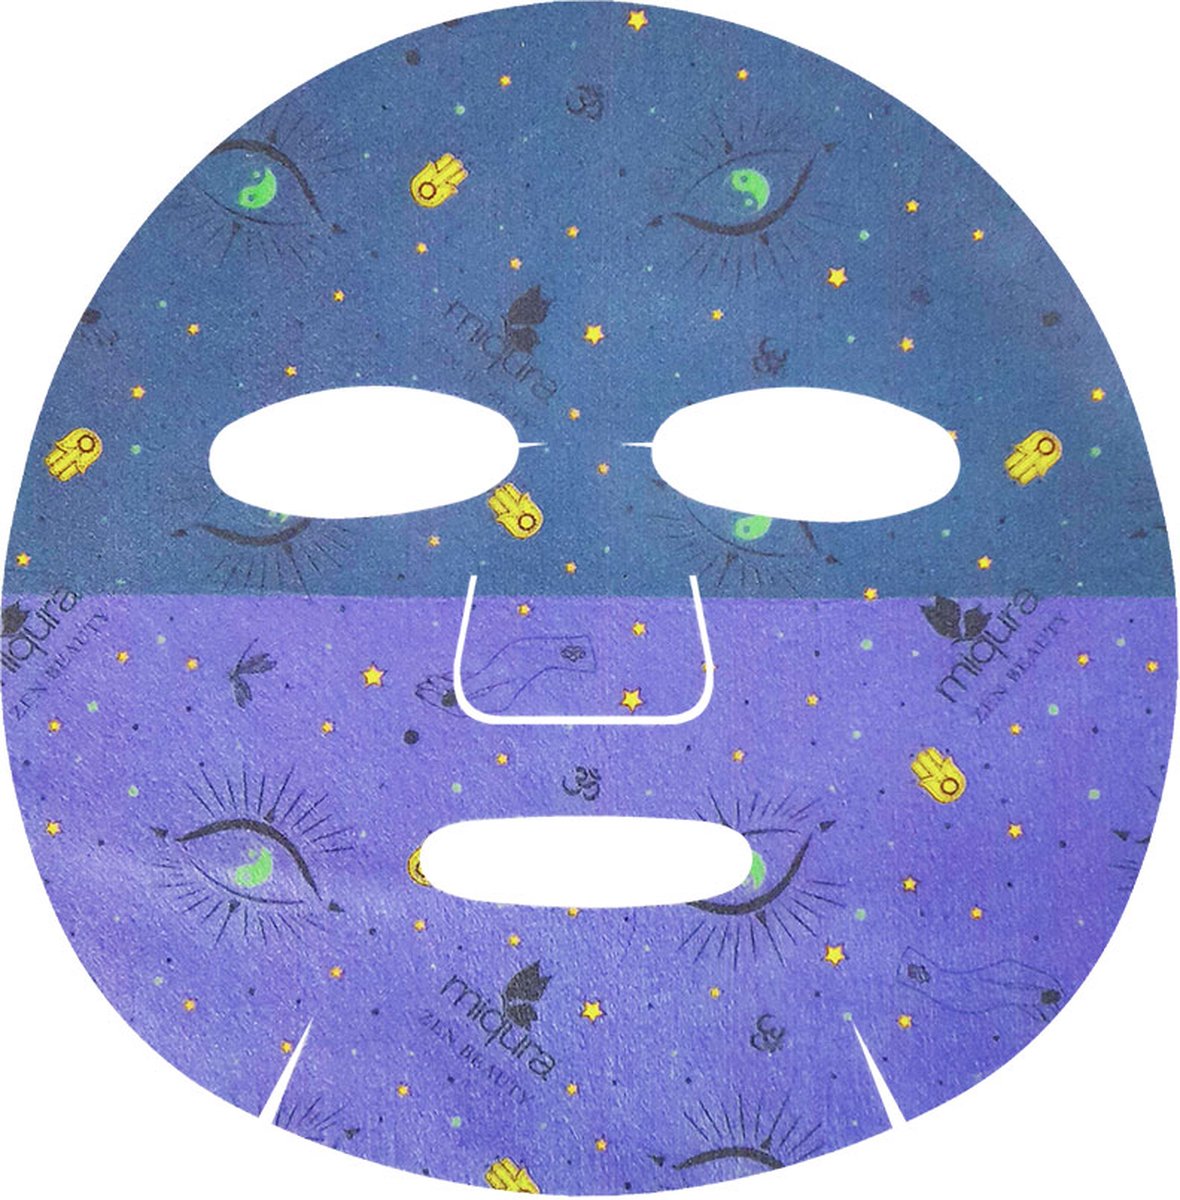 Miqura - Zen Beauty Sleep - Before Sleep Mask